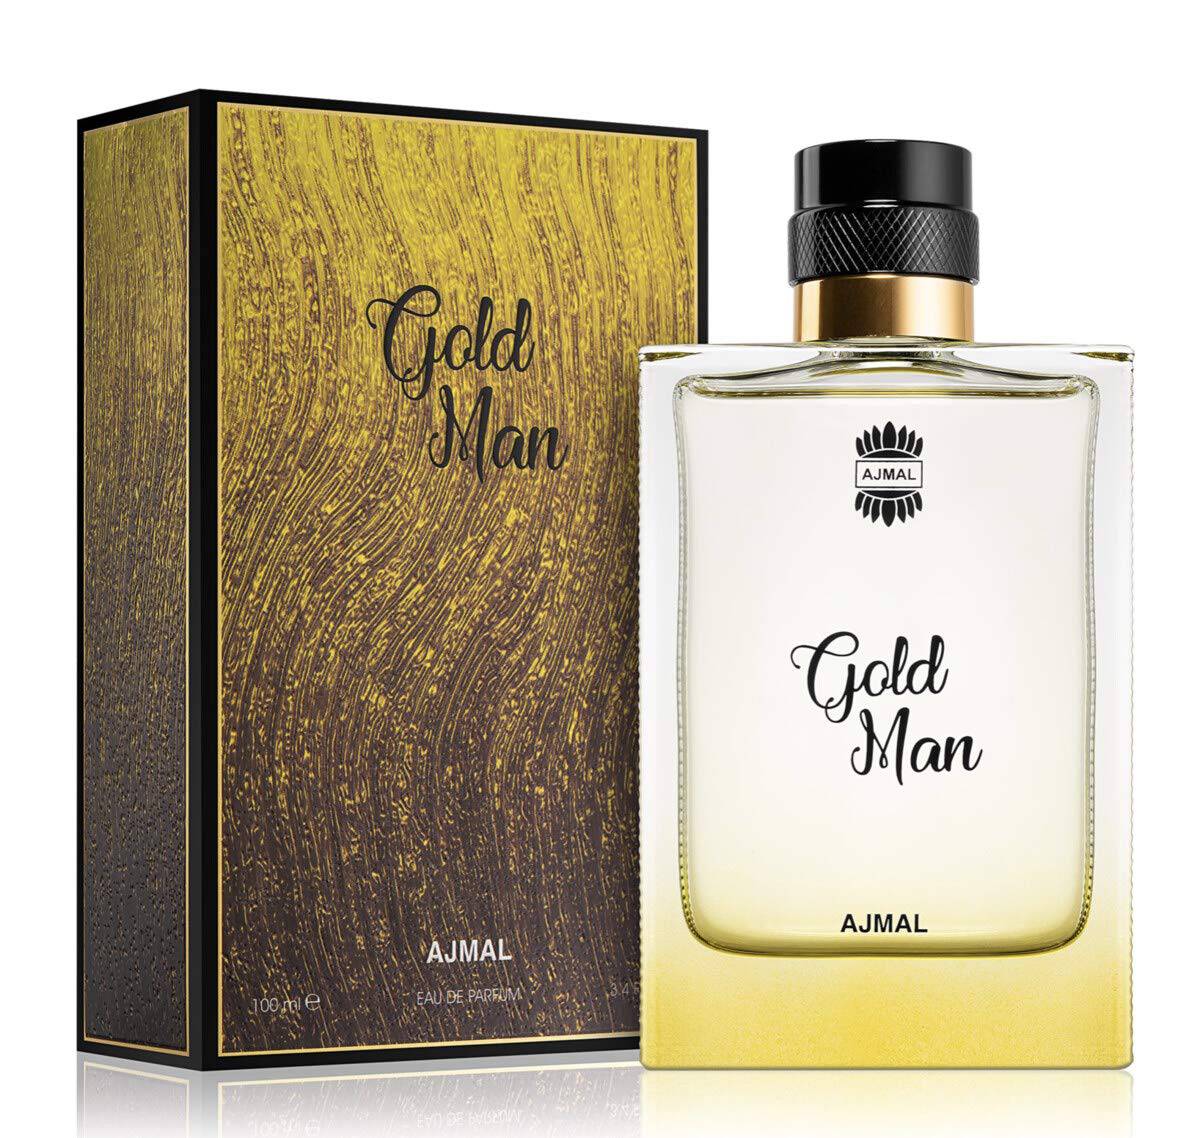 Gold Man EDP - Eau De Parfum 100 ML (3.4 oz) by Ajmal Perfumes - Intense oud